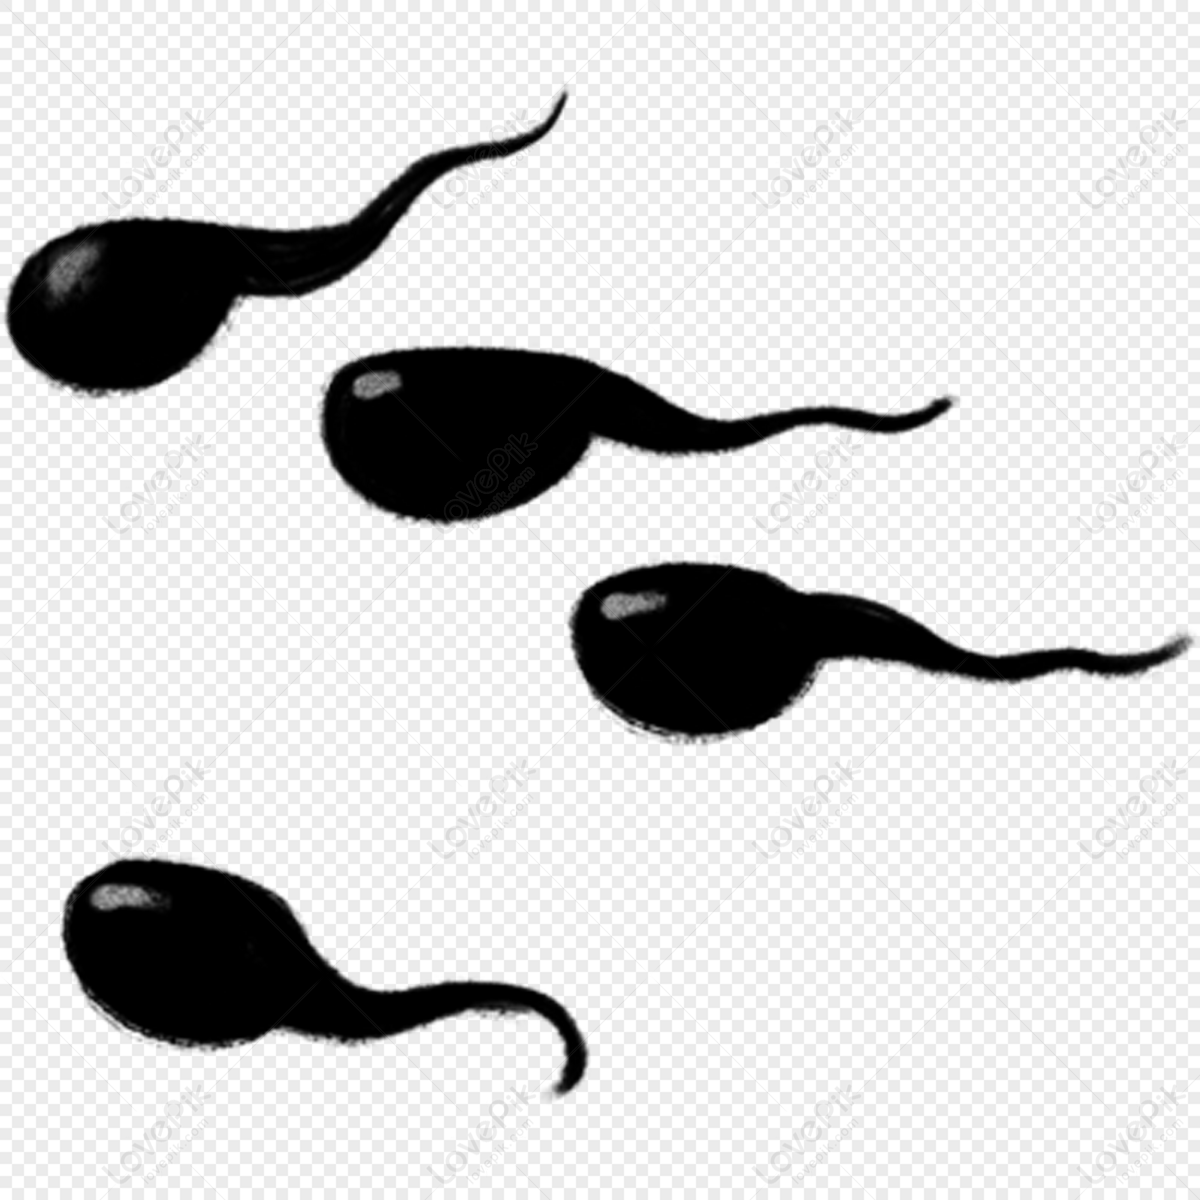 tadpole clip art black and white